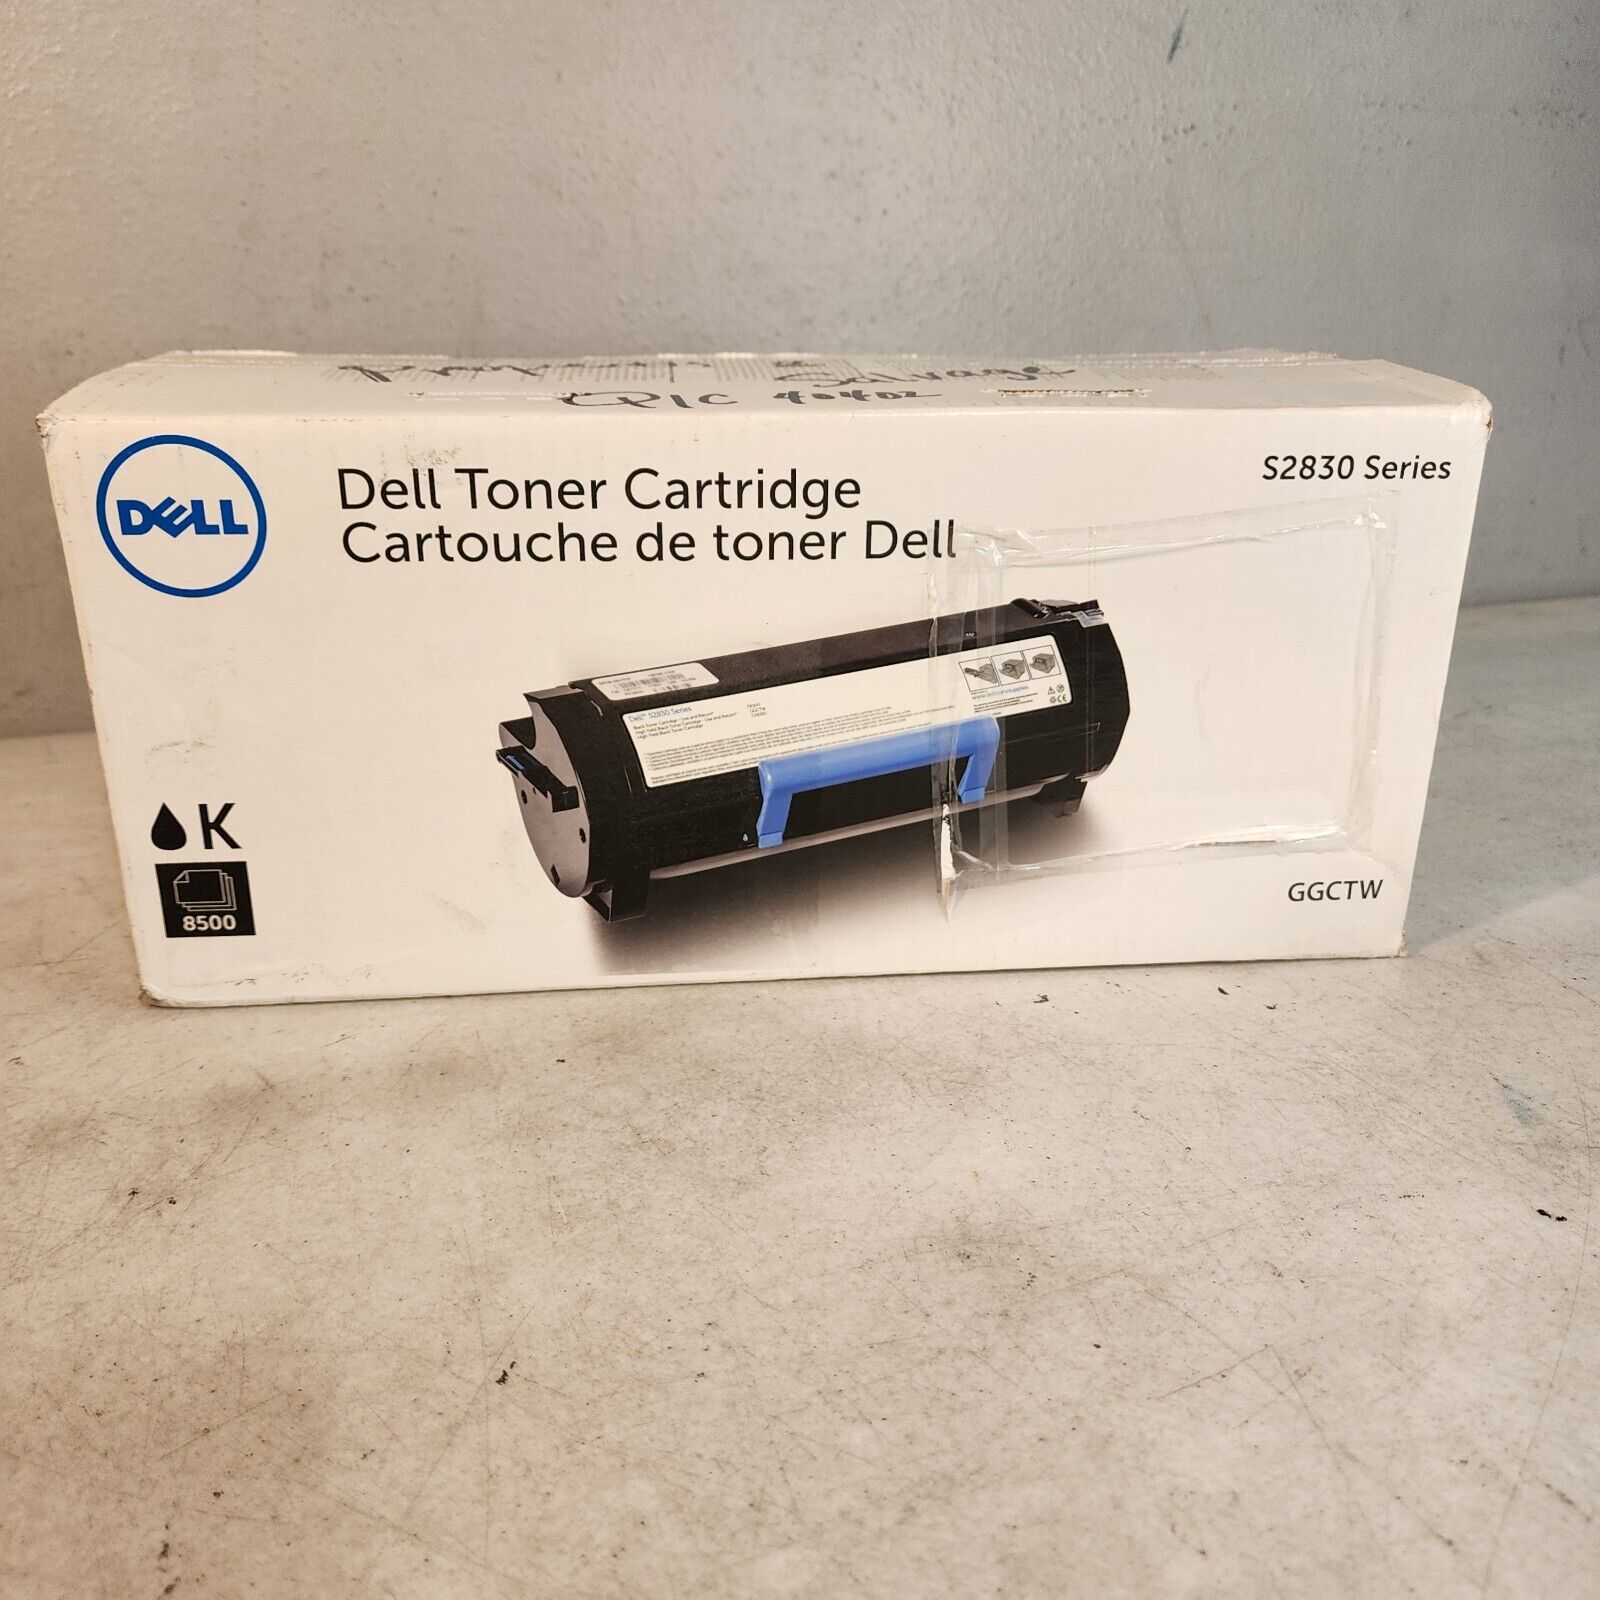 Dell GGCTW Black Toner S2830 Series Genuine New OEM Sealed Box